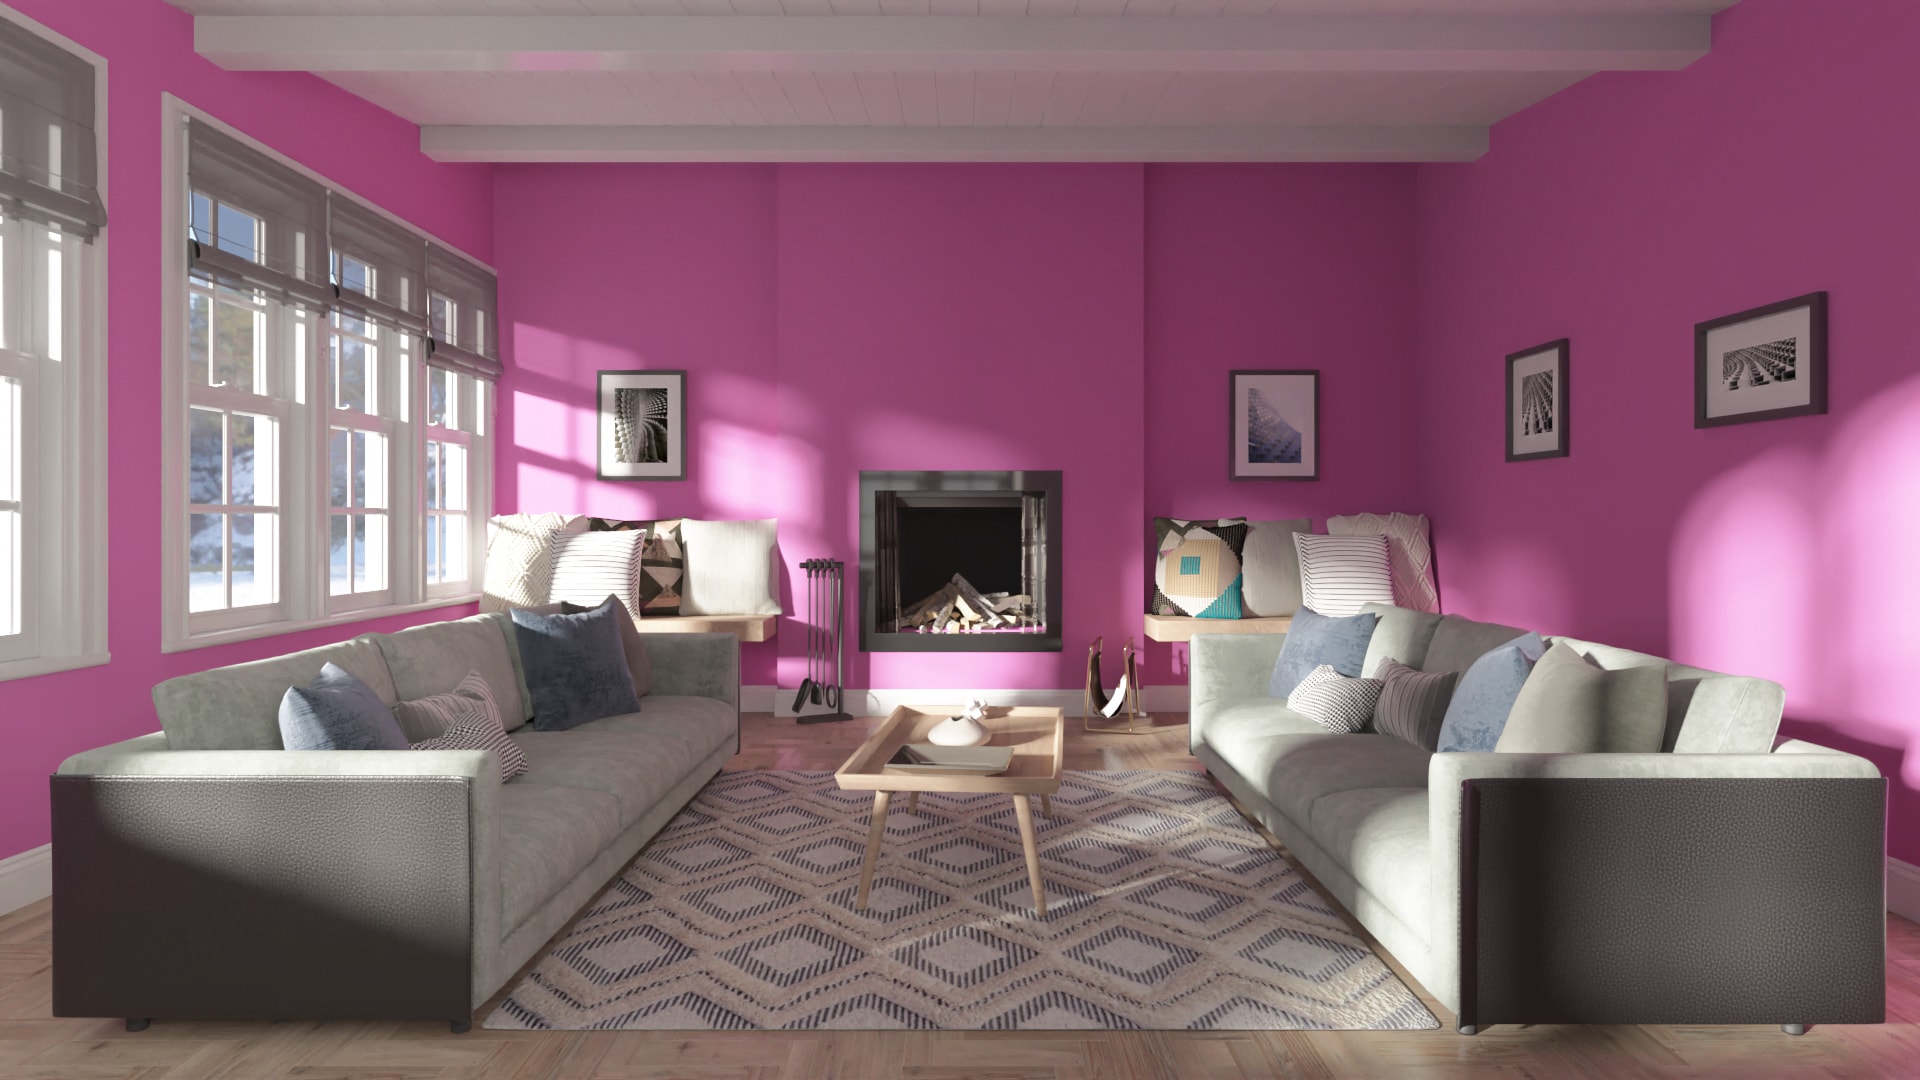 Pink Interior Paint at